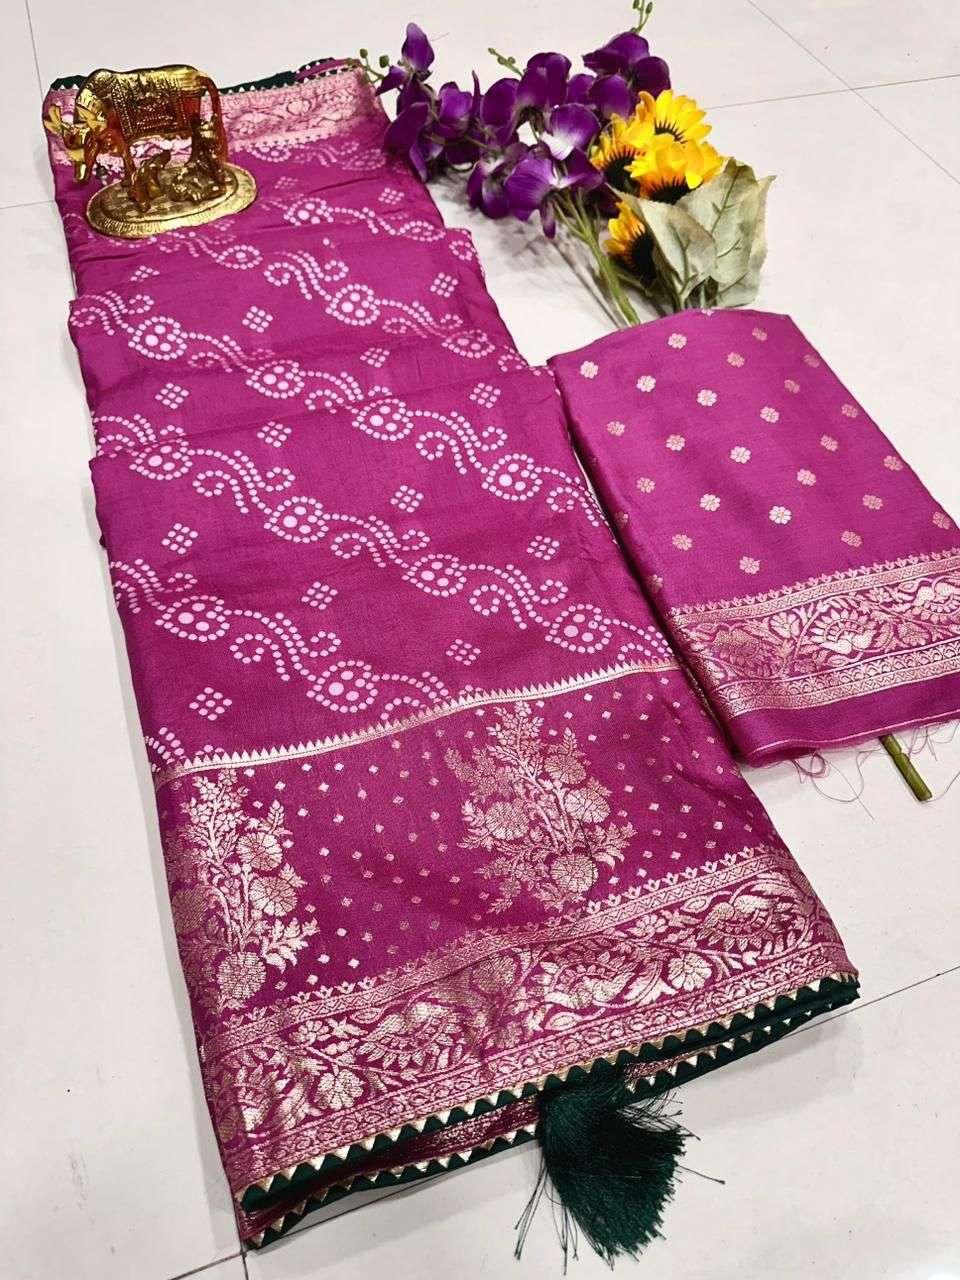 saree exclusive arrivals soft viscose saree in bandhani concept let us make u feel like queen by launching our new concept in saree soft viscose dola saree with finest bandhani zari weaving